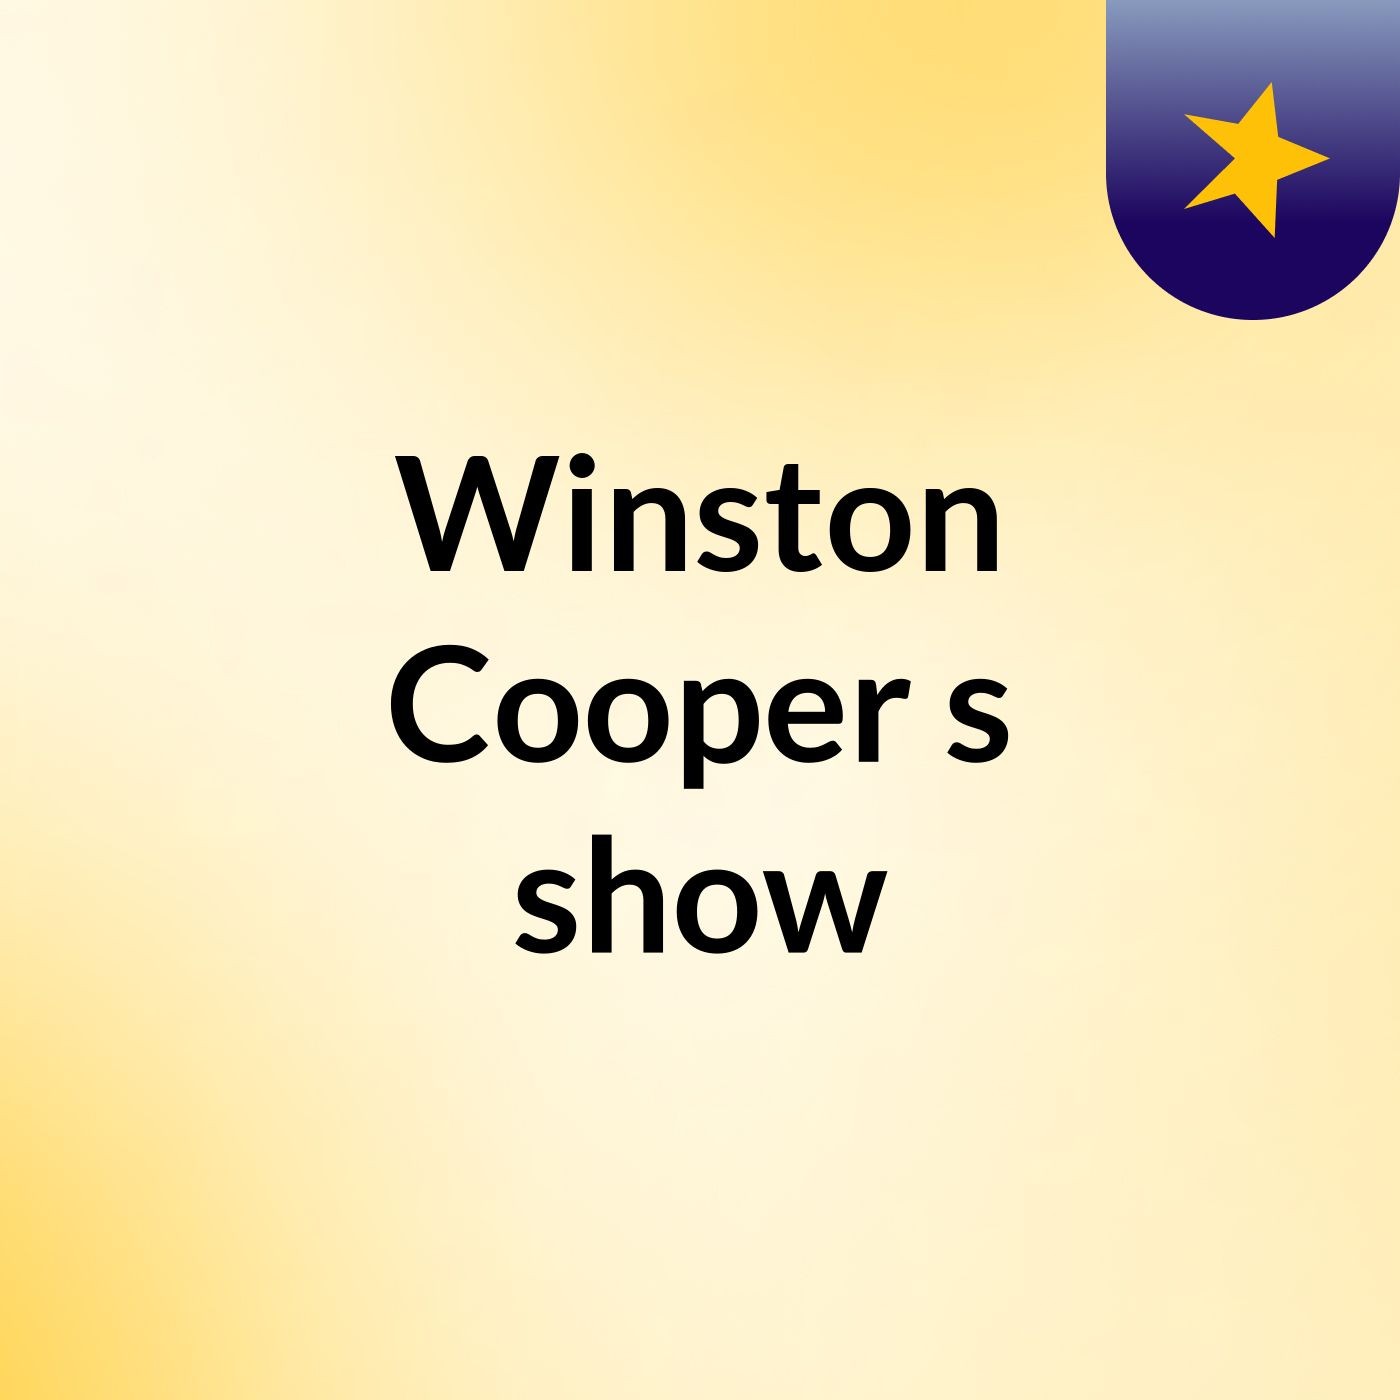 Winston Cooper's show